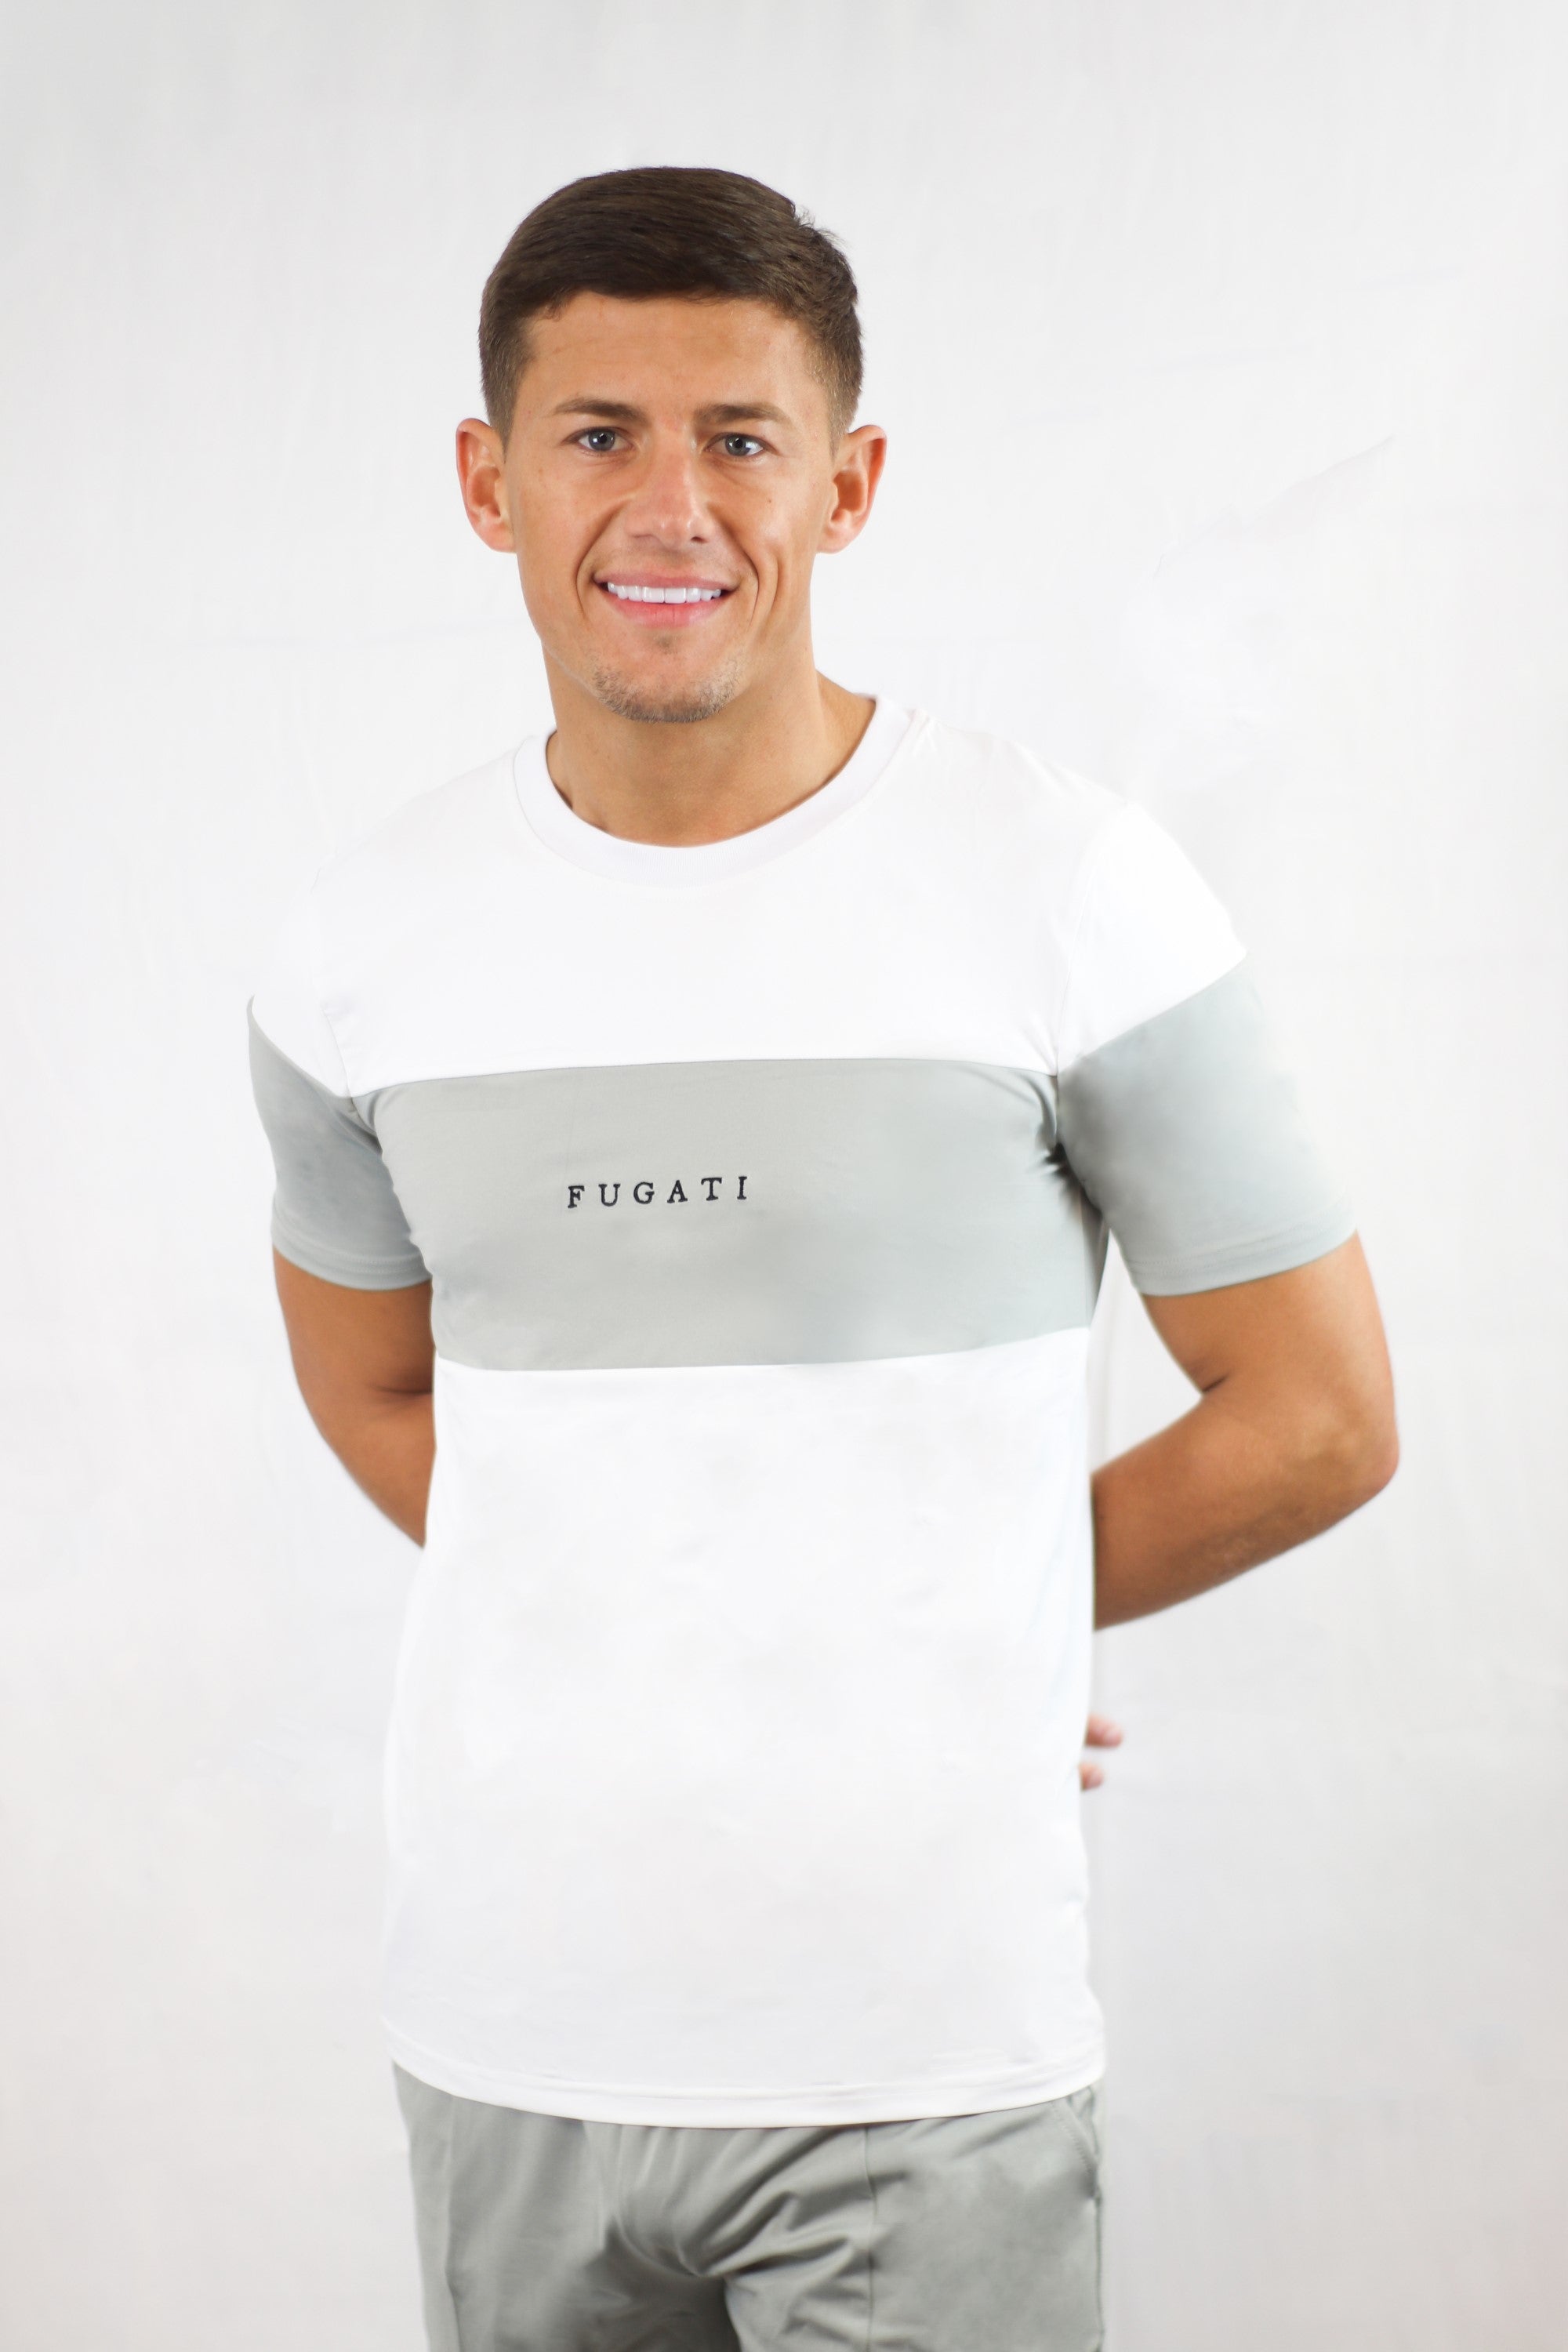 Fugati T-shirt - White/Grey